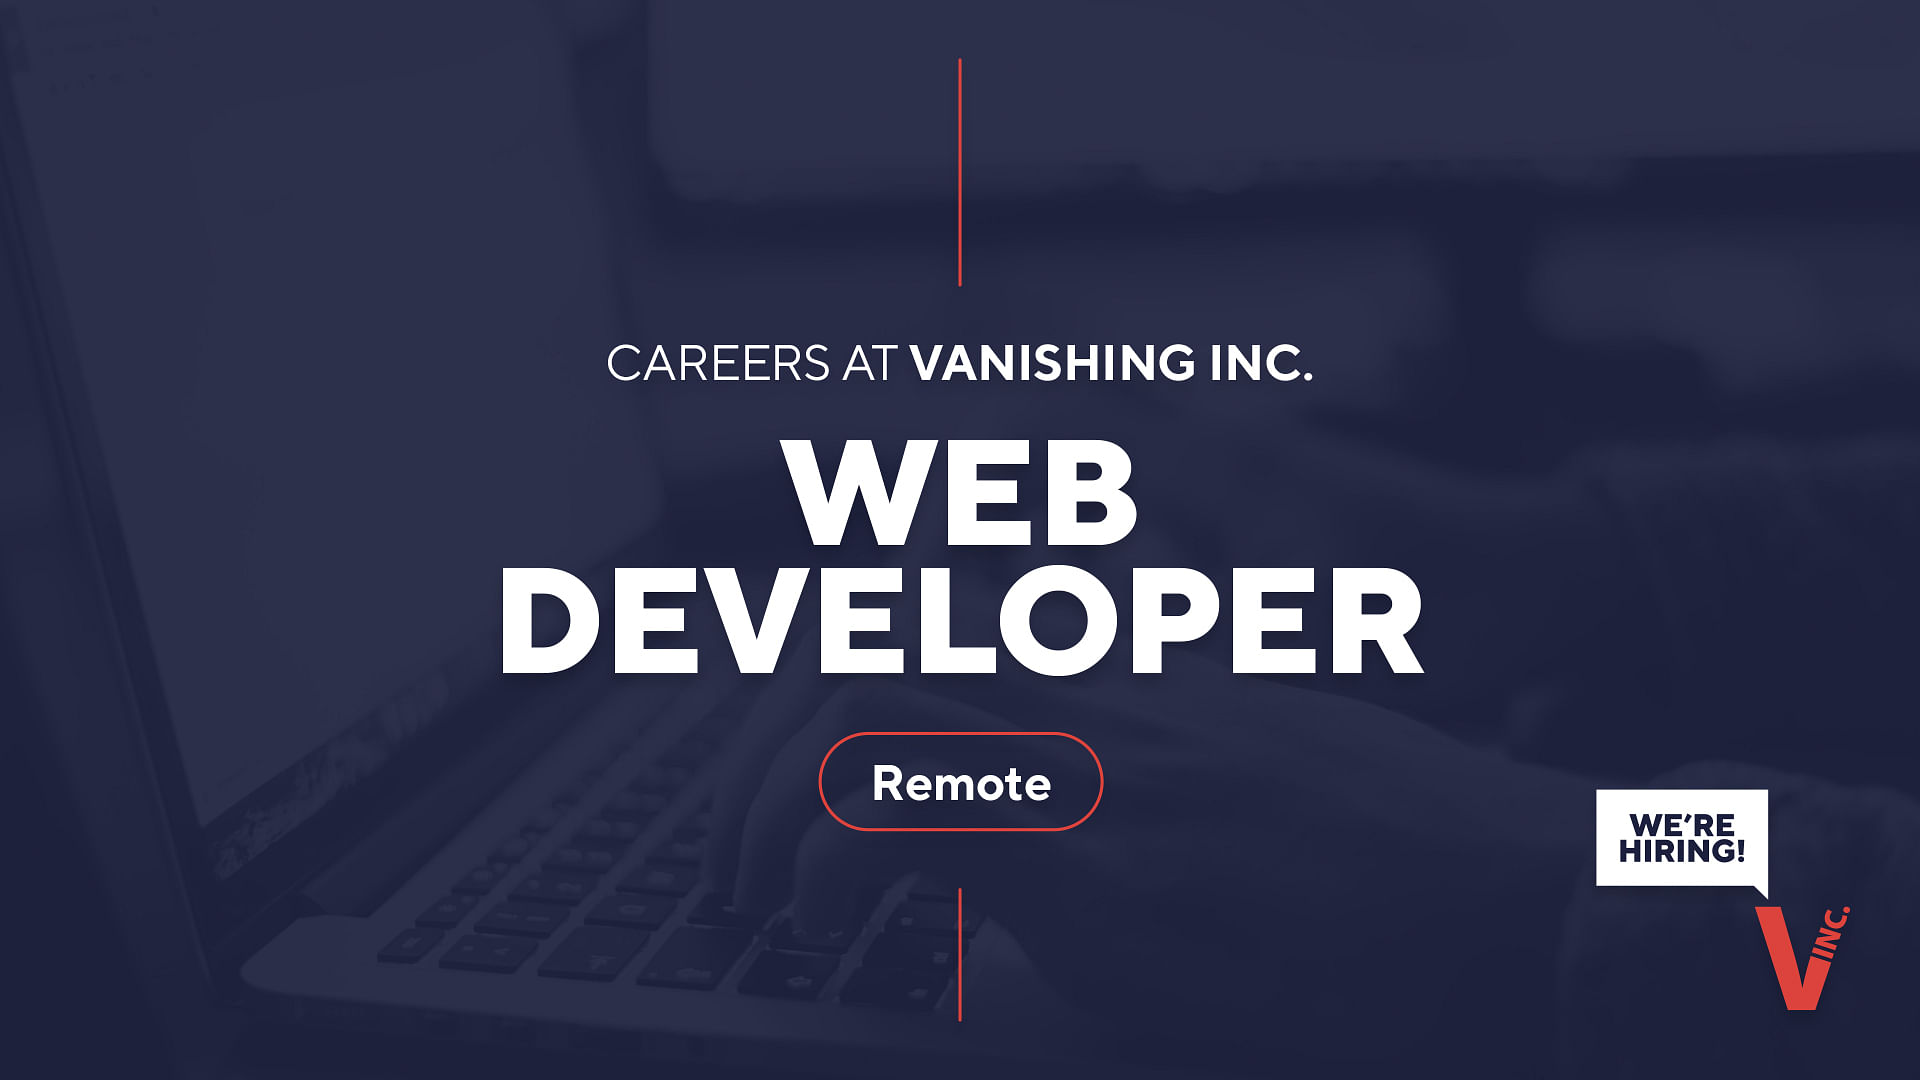 Web Developer Job